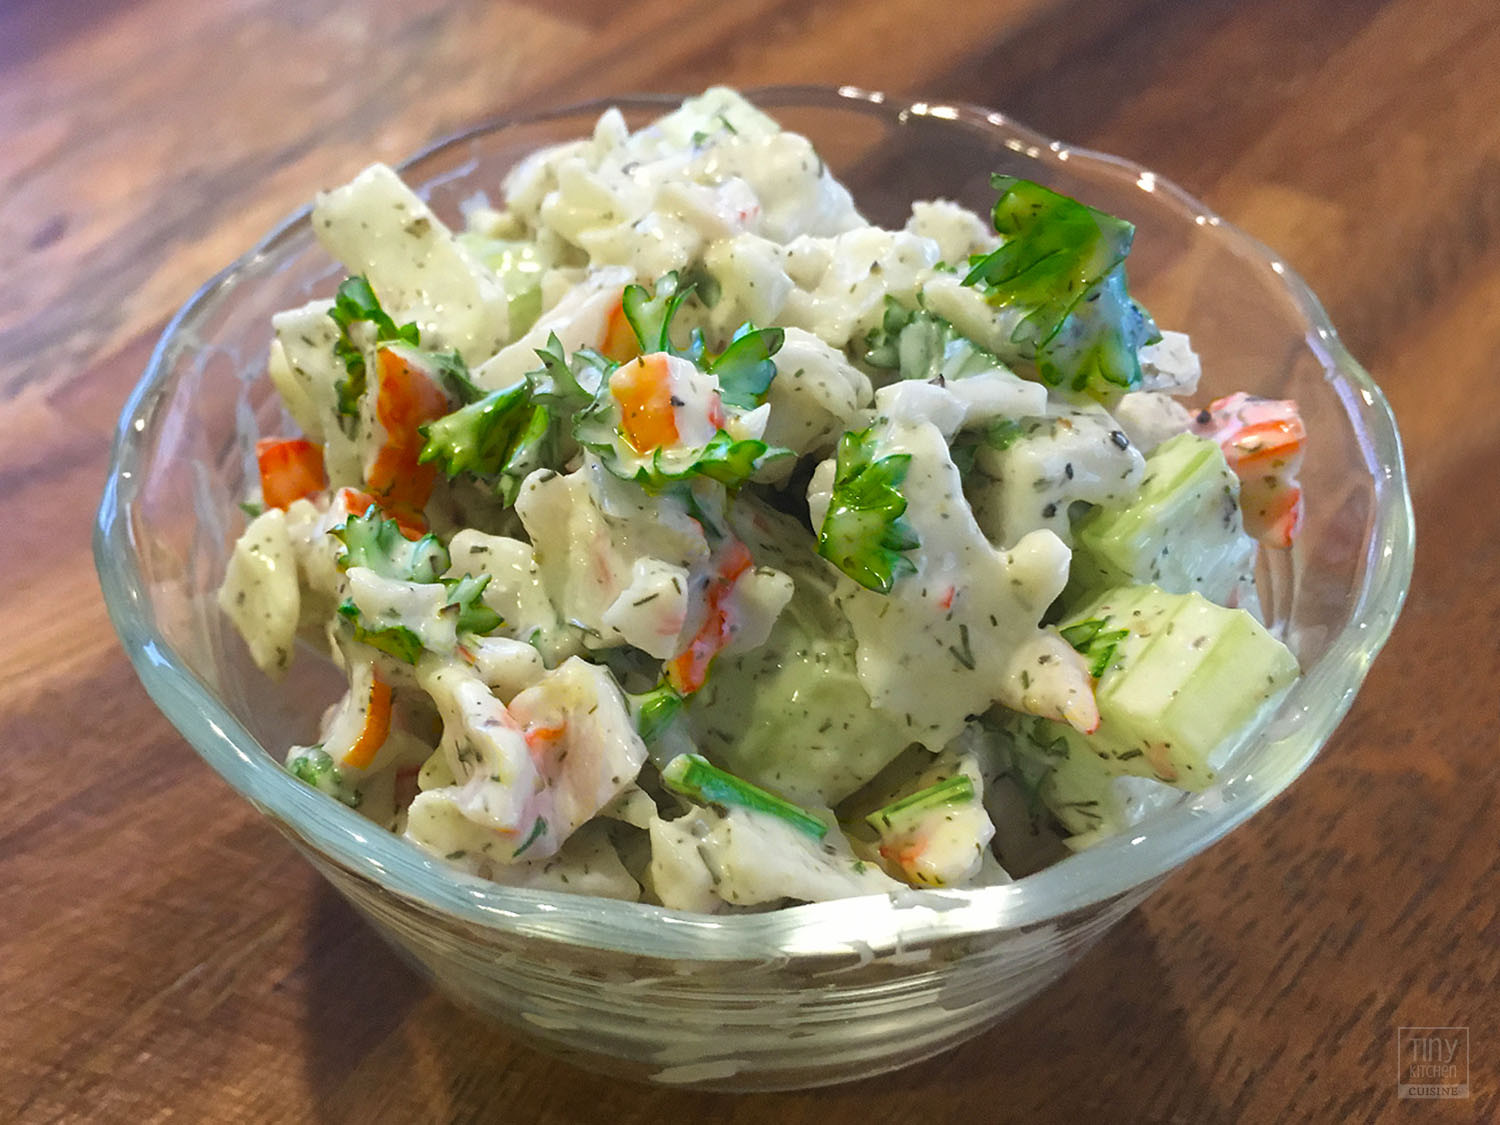 Seafood Salad Recipe Imitation Crab And Shrimp
 Imitation Crab Salad Recipe How to Make it Just Like the